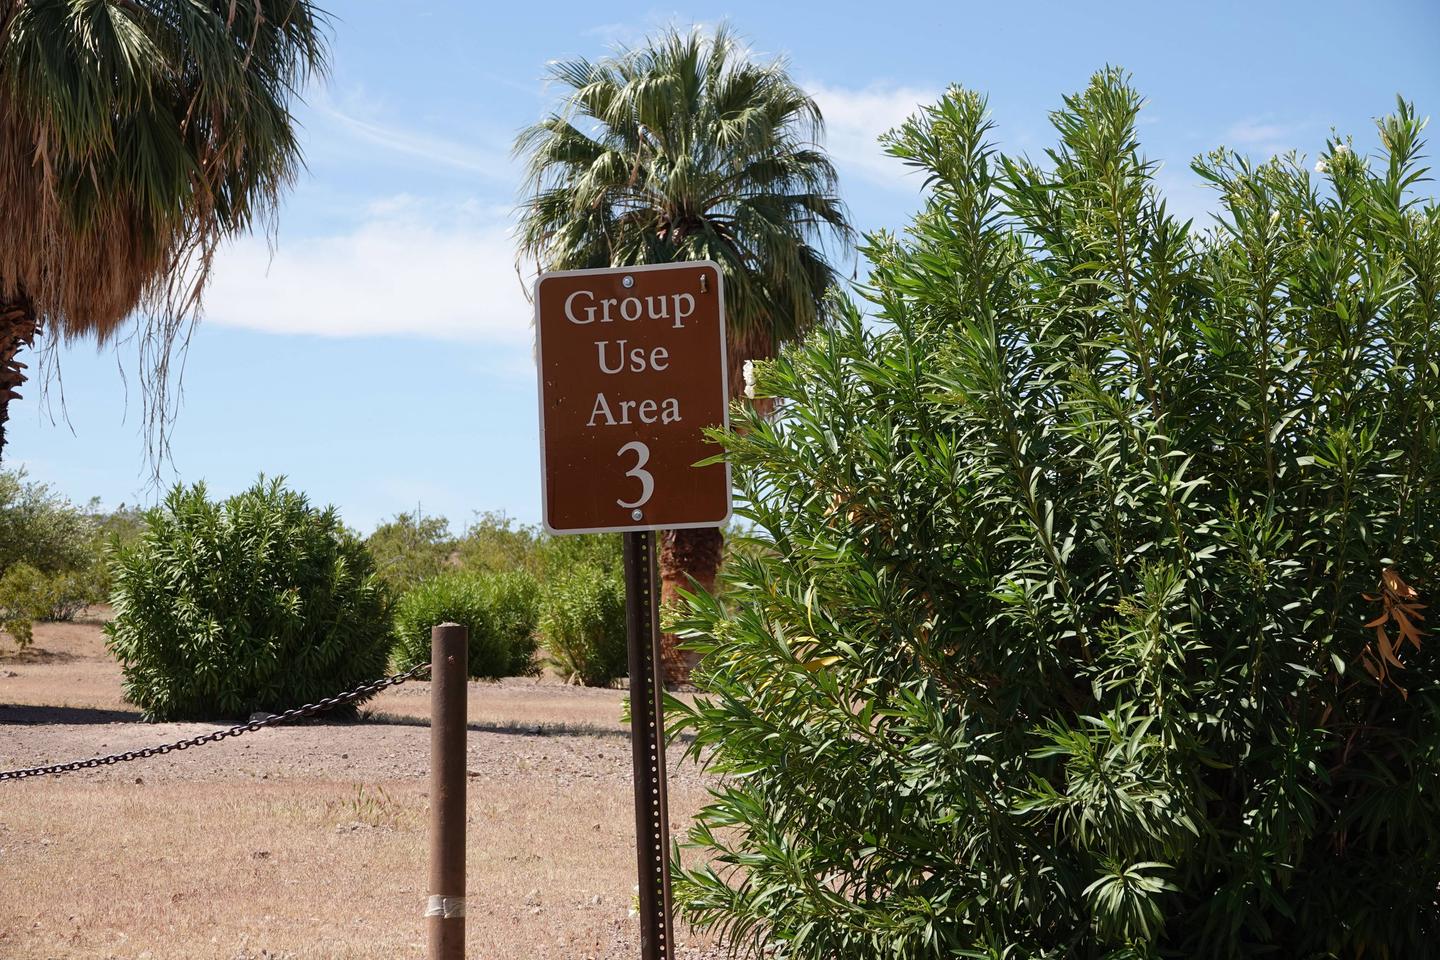 Campsite 3 sign located in a desert settingBoulder Beach Group Site 3